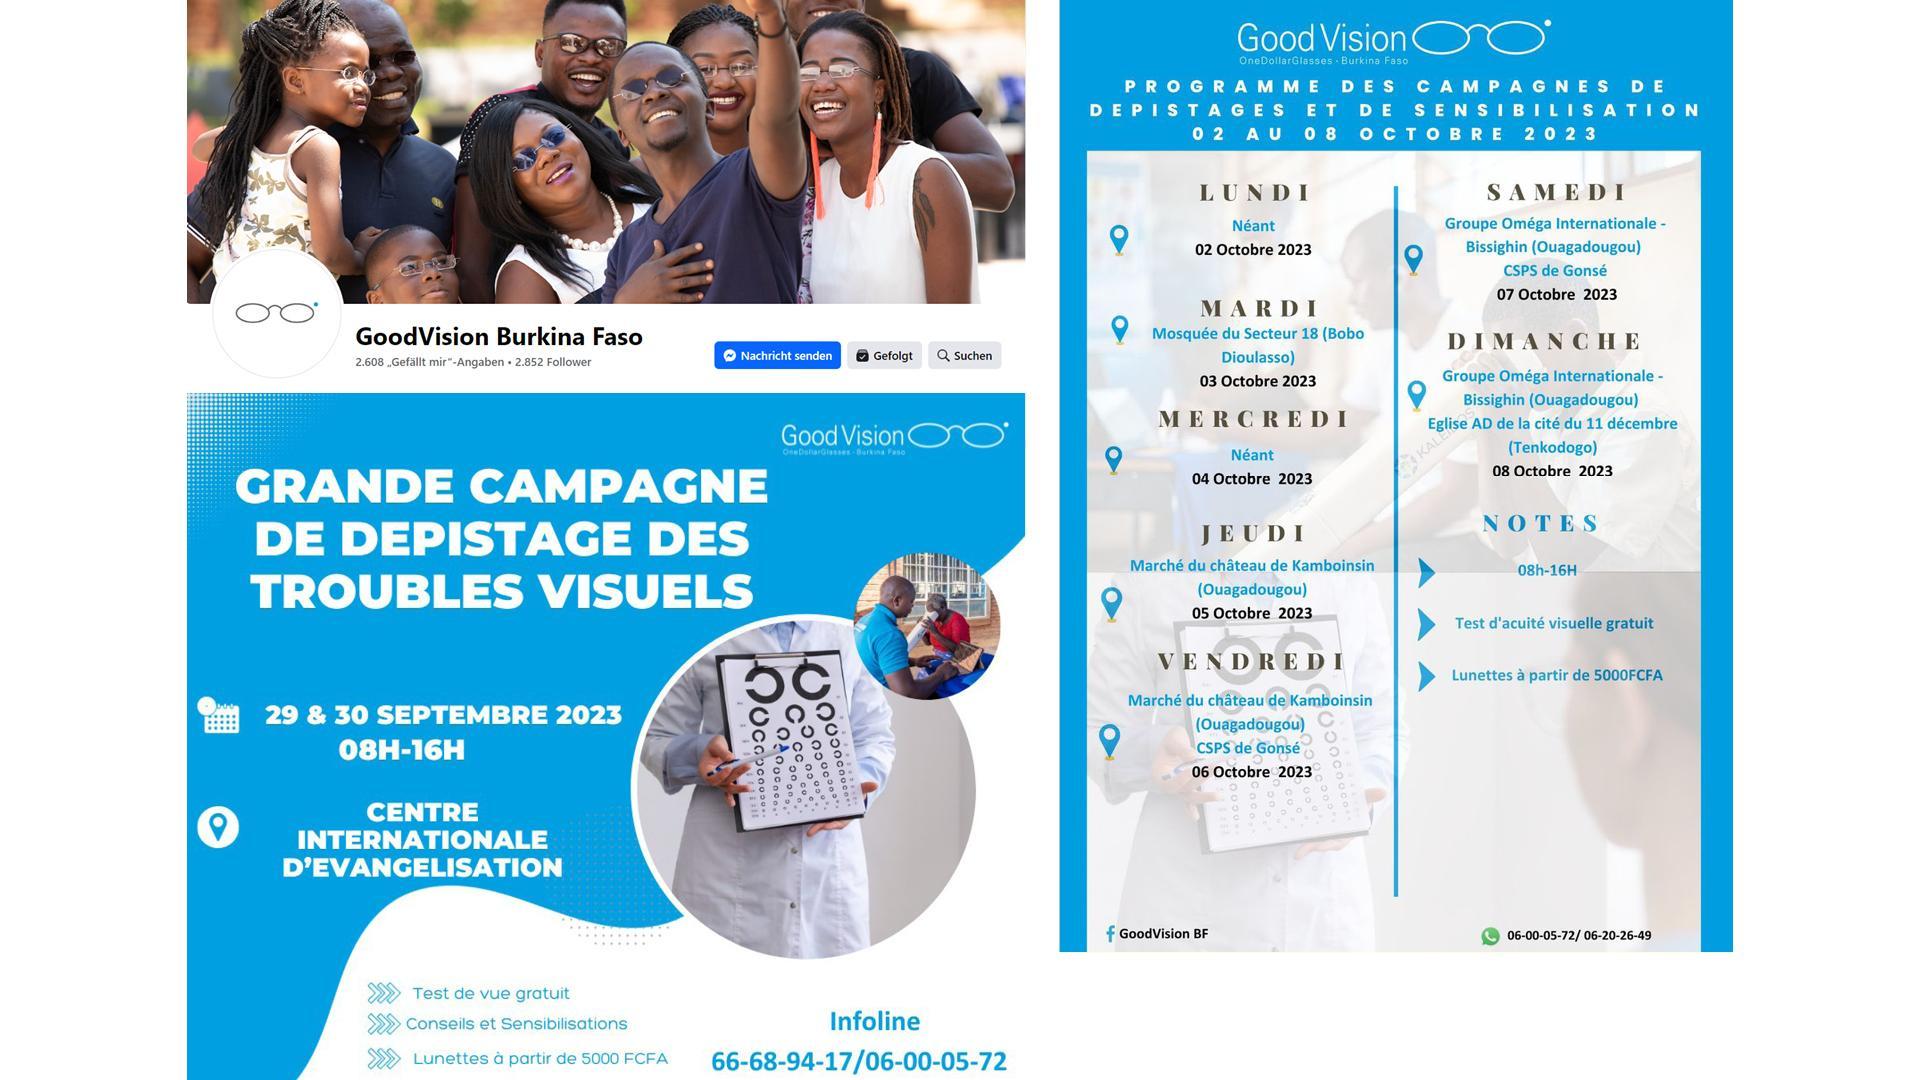 Announcement of eye tests via Facebook in Burkina Faso